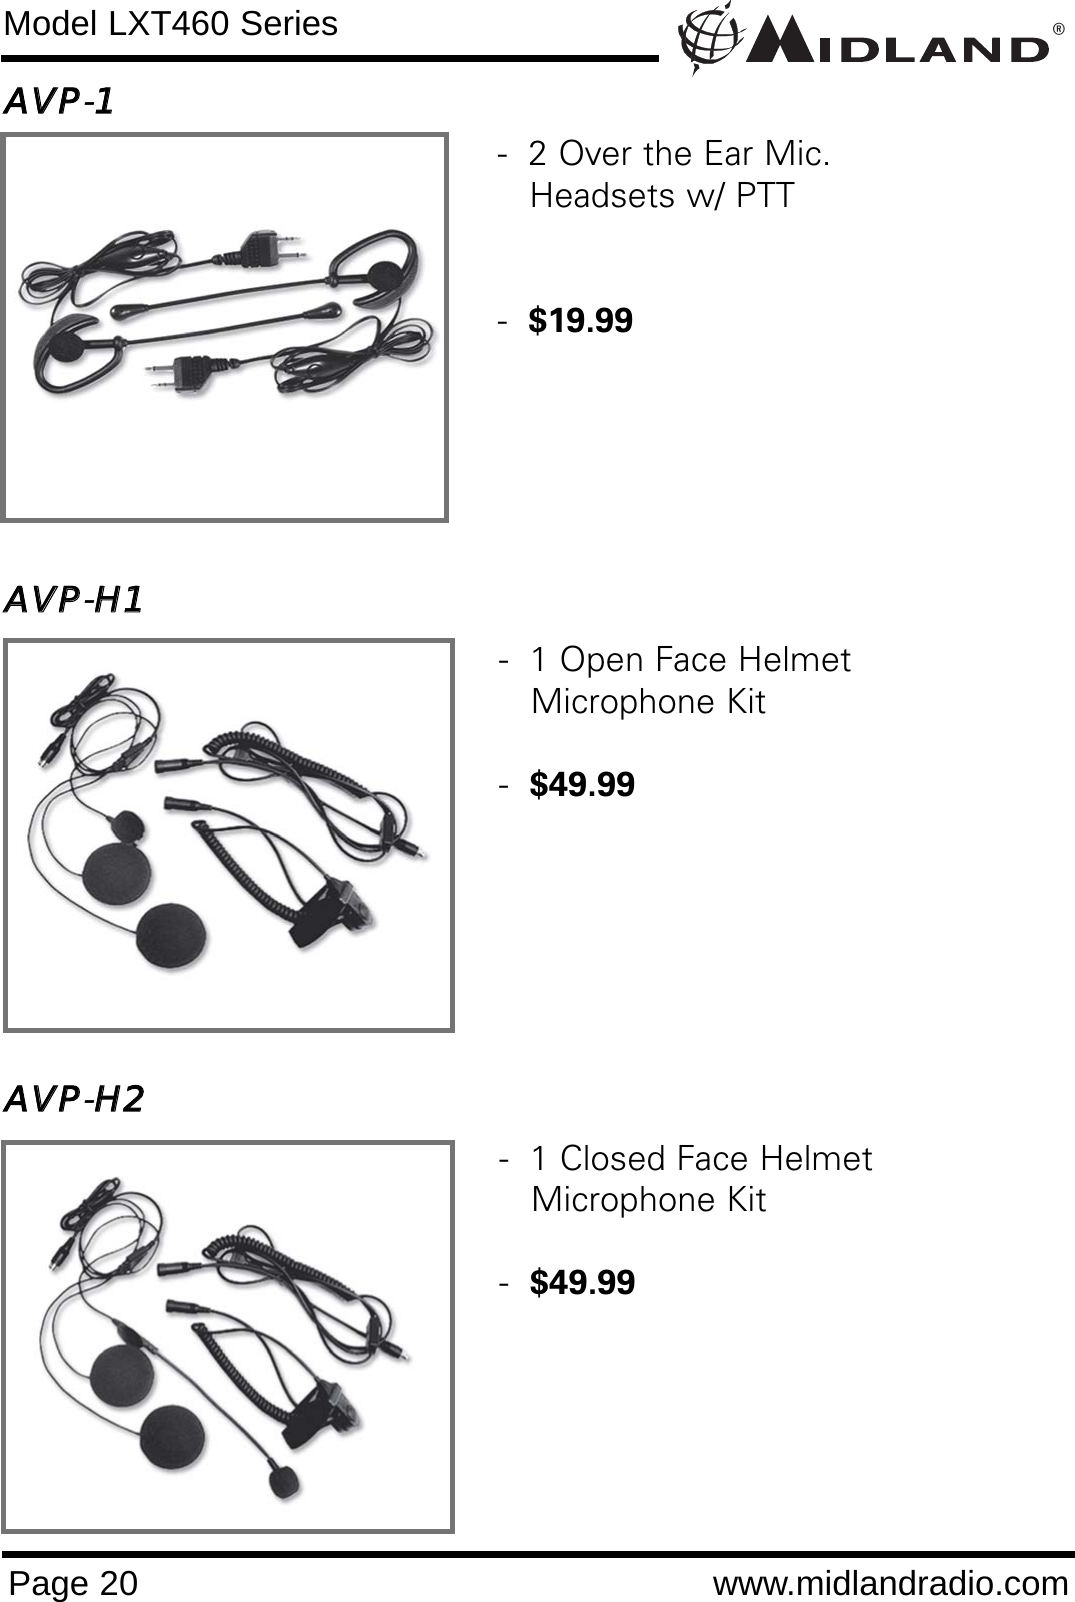 AAVVPP-11AAVVPP-HH11AAVVPP-HH22®Page 20 www.midlandradio.comModel LXT460 Series-  1 Open Face Helmet Microphone Kit-  $49.99-  1 Closed Face HelmetMicrophone Kit-  $49.99-  2 Over the Ear Mic. Headsets w/ PTT-  $19.99